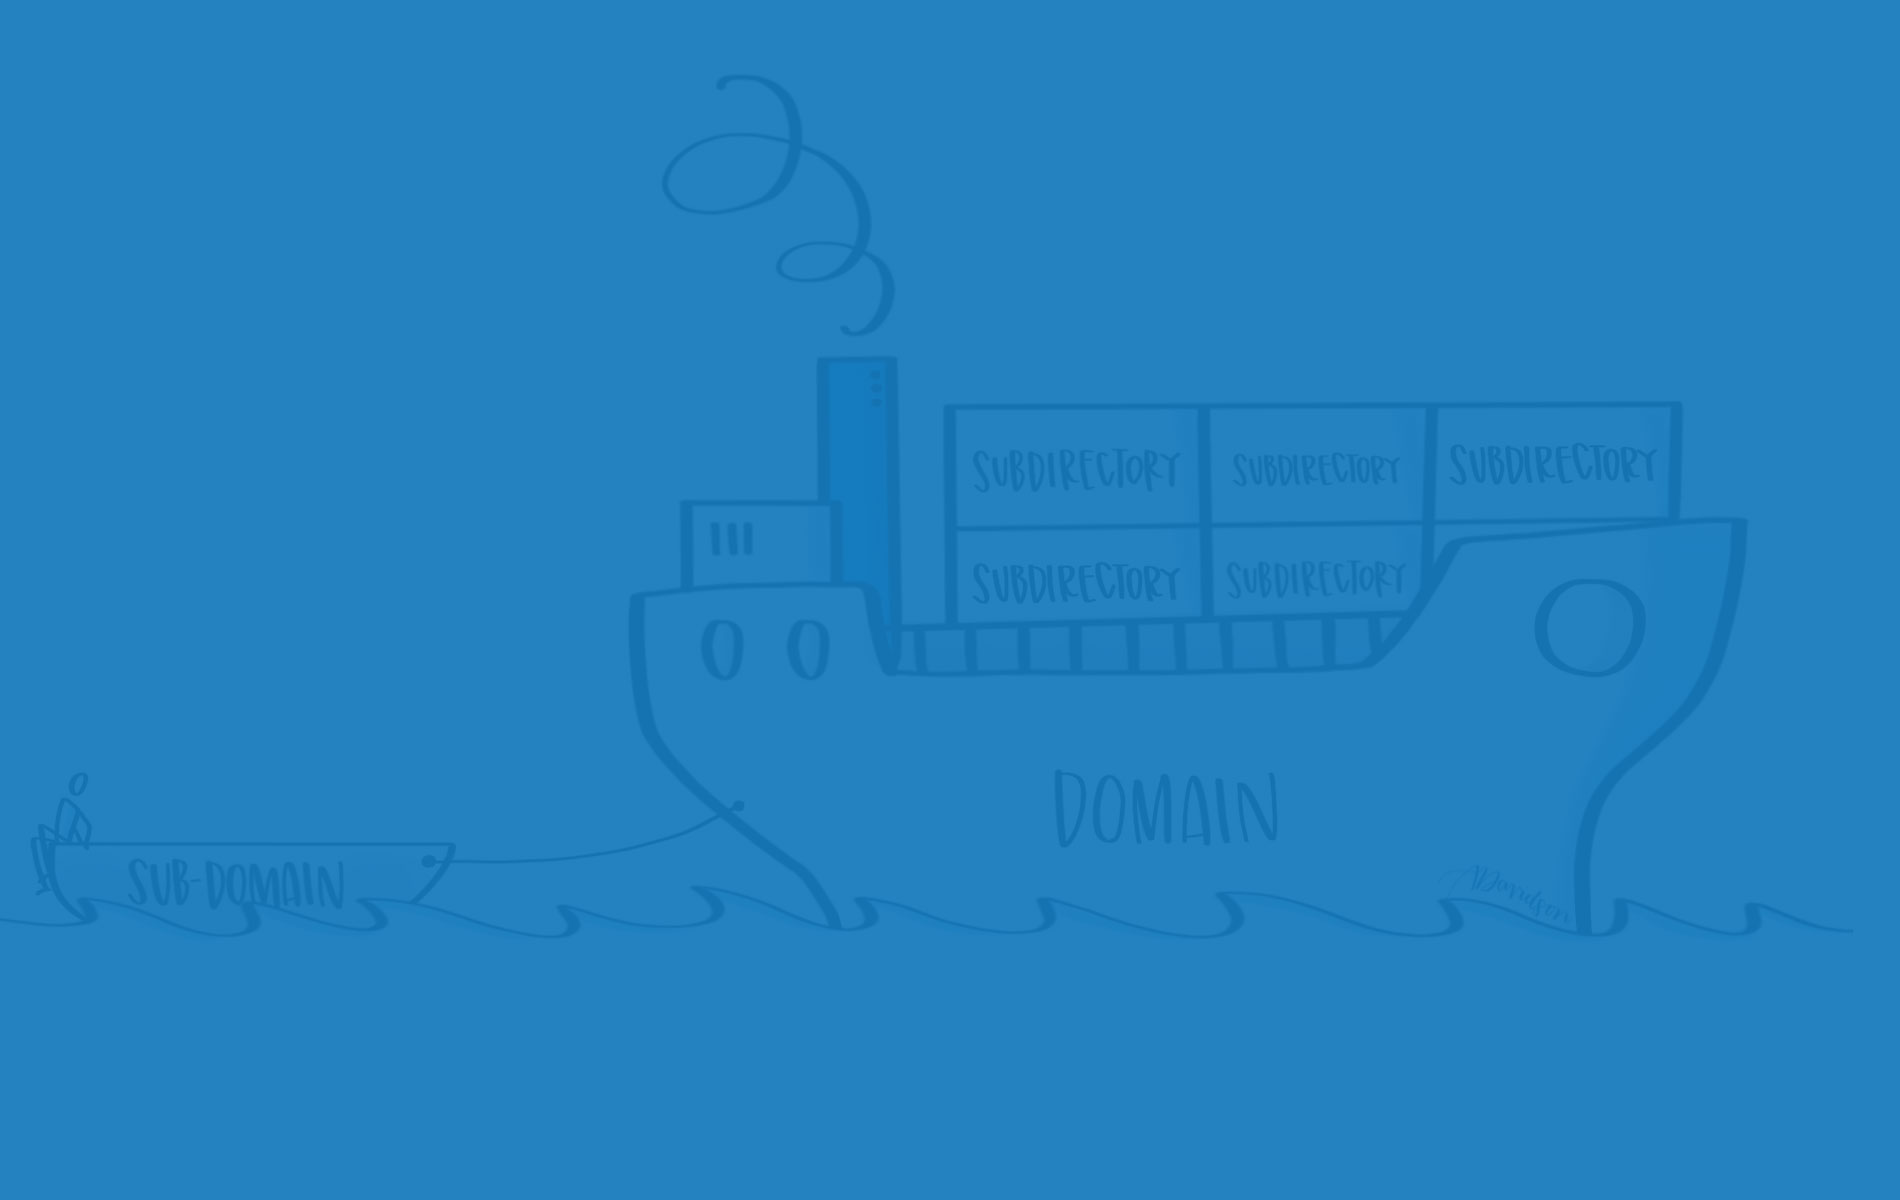 Sub-domains vs. Domains vs. Sub-directories